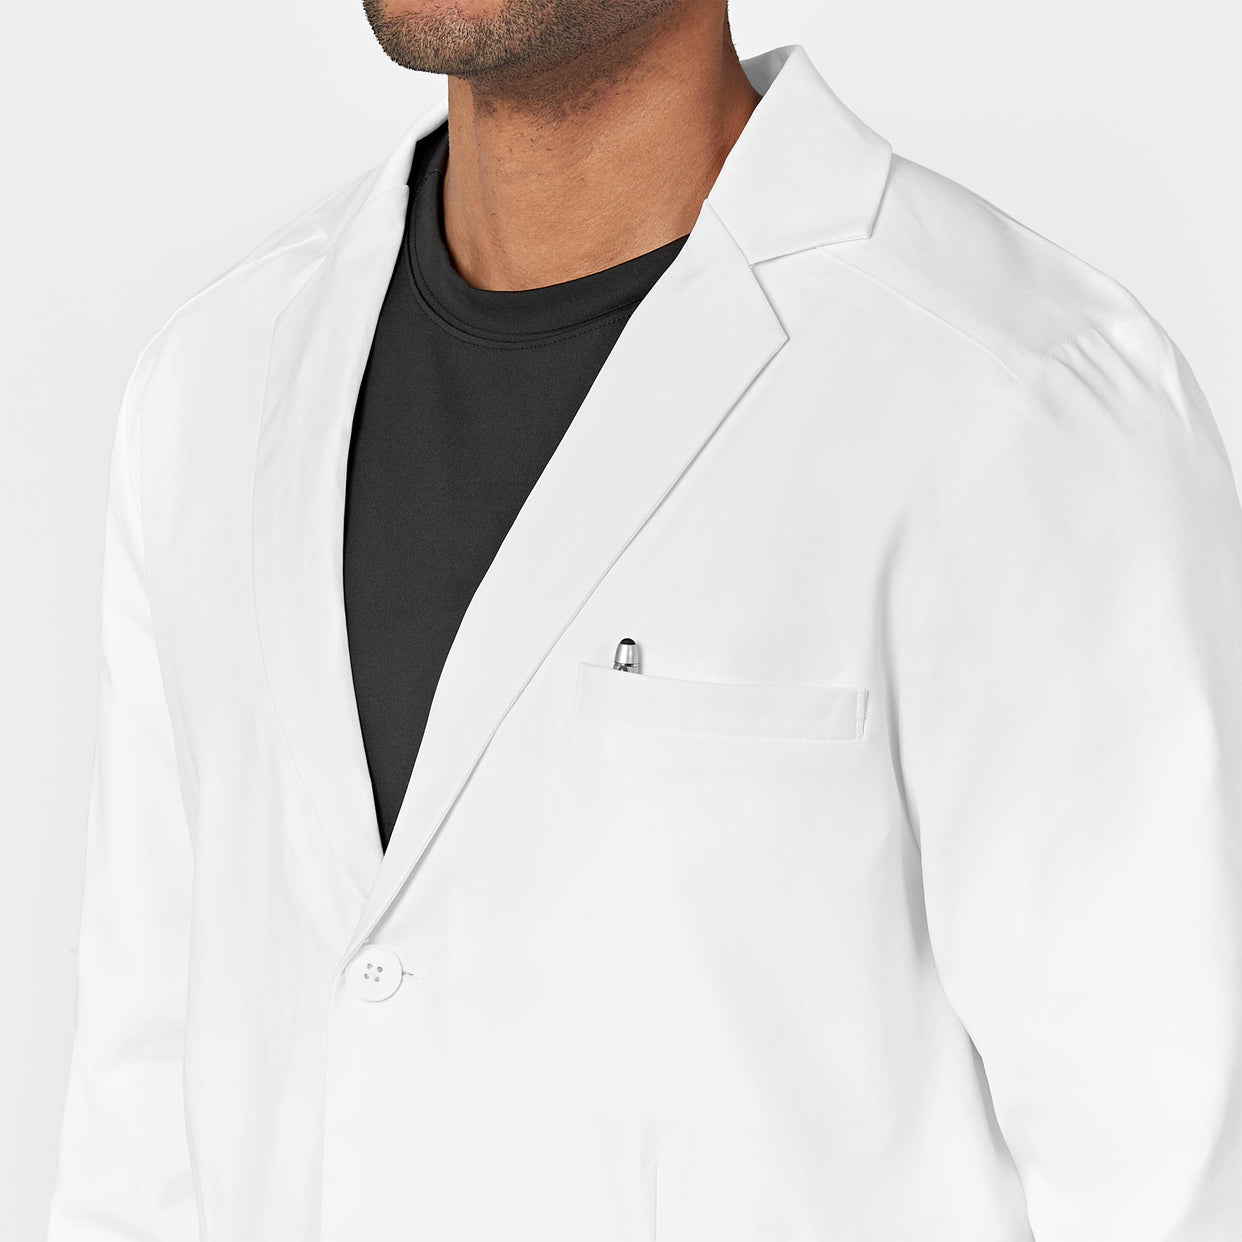 Slate Men's 38 Inch Doctors Coat - White